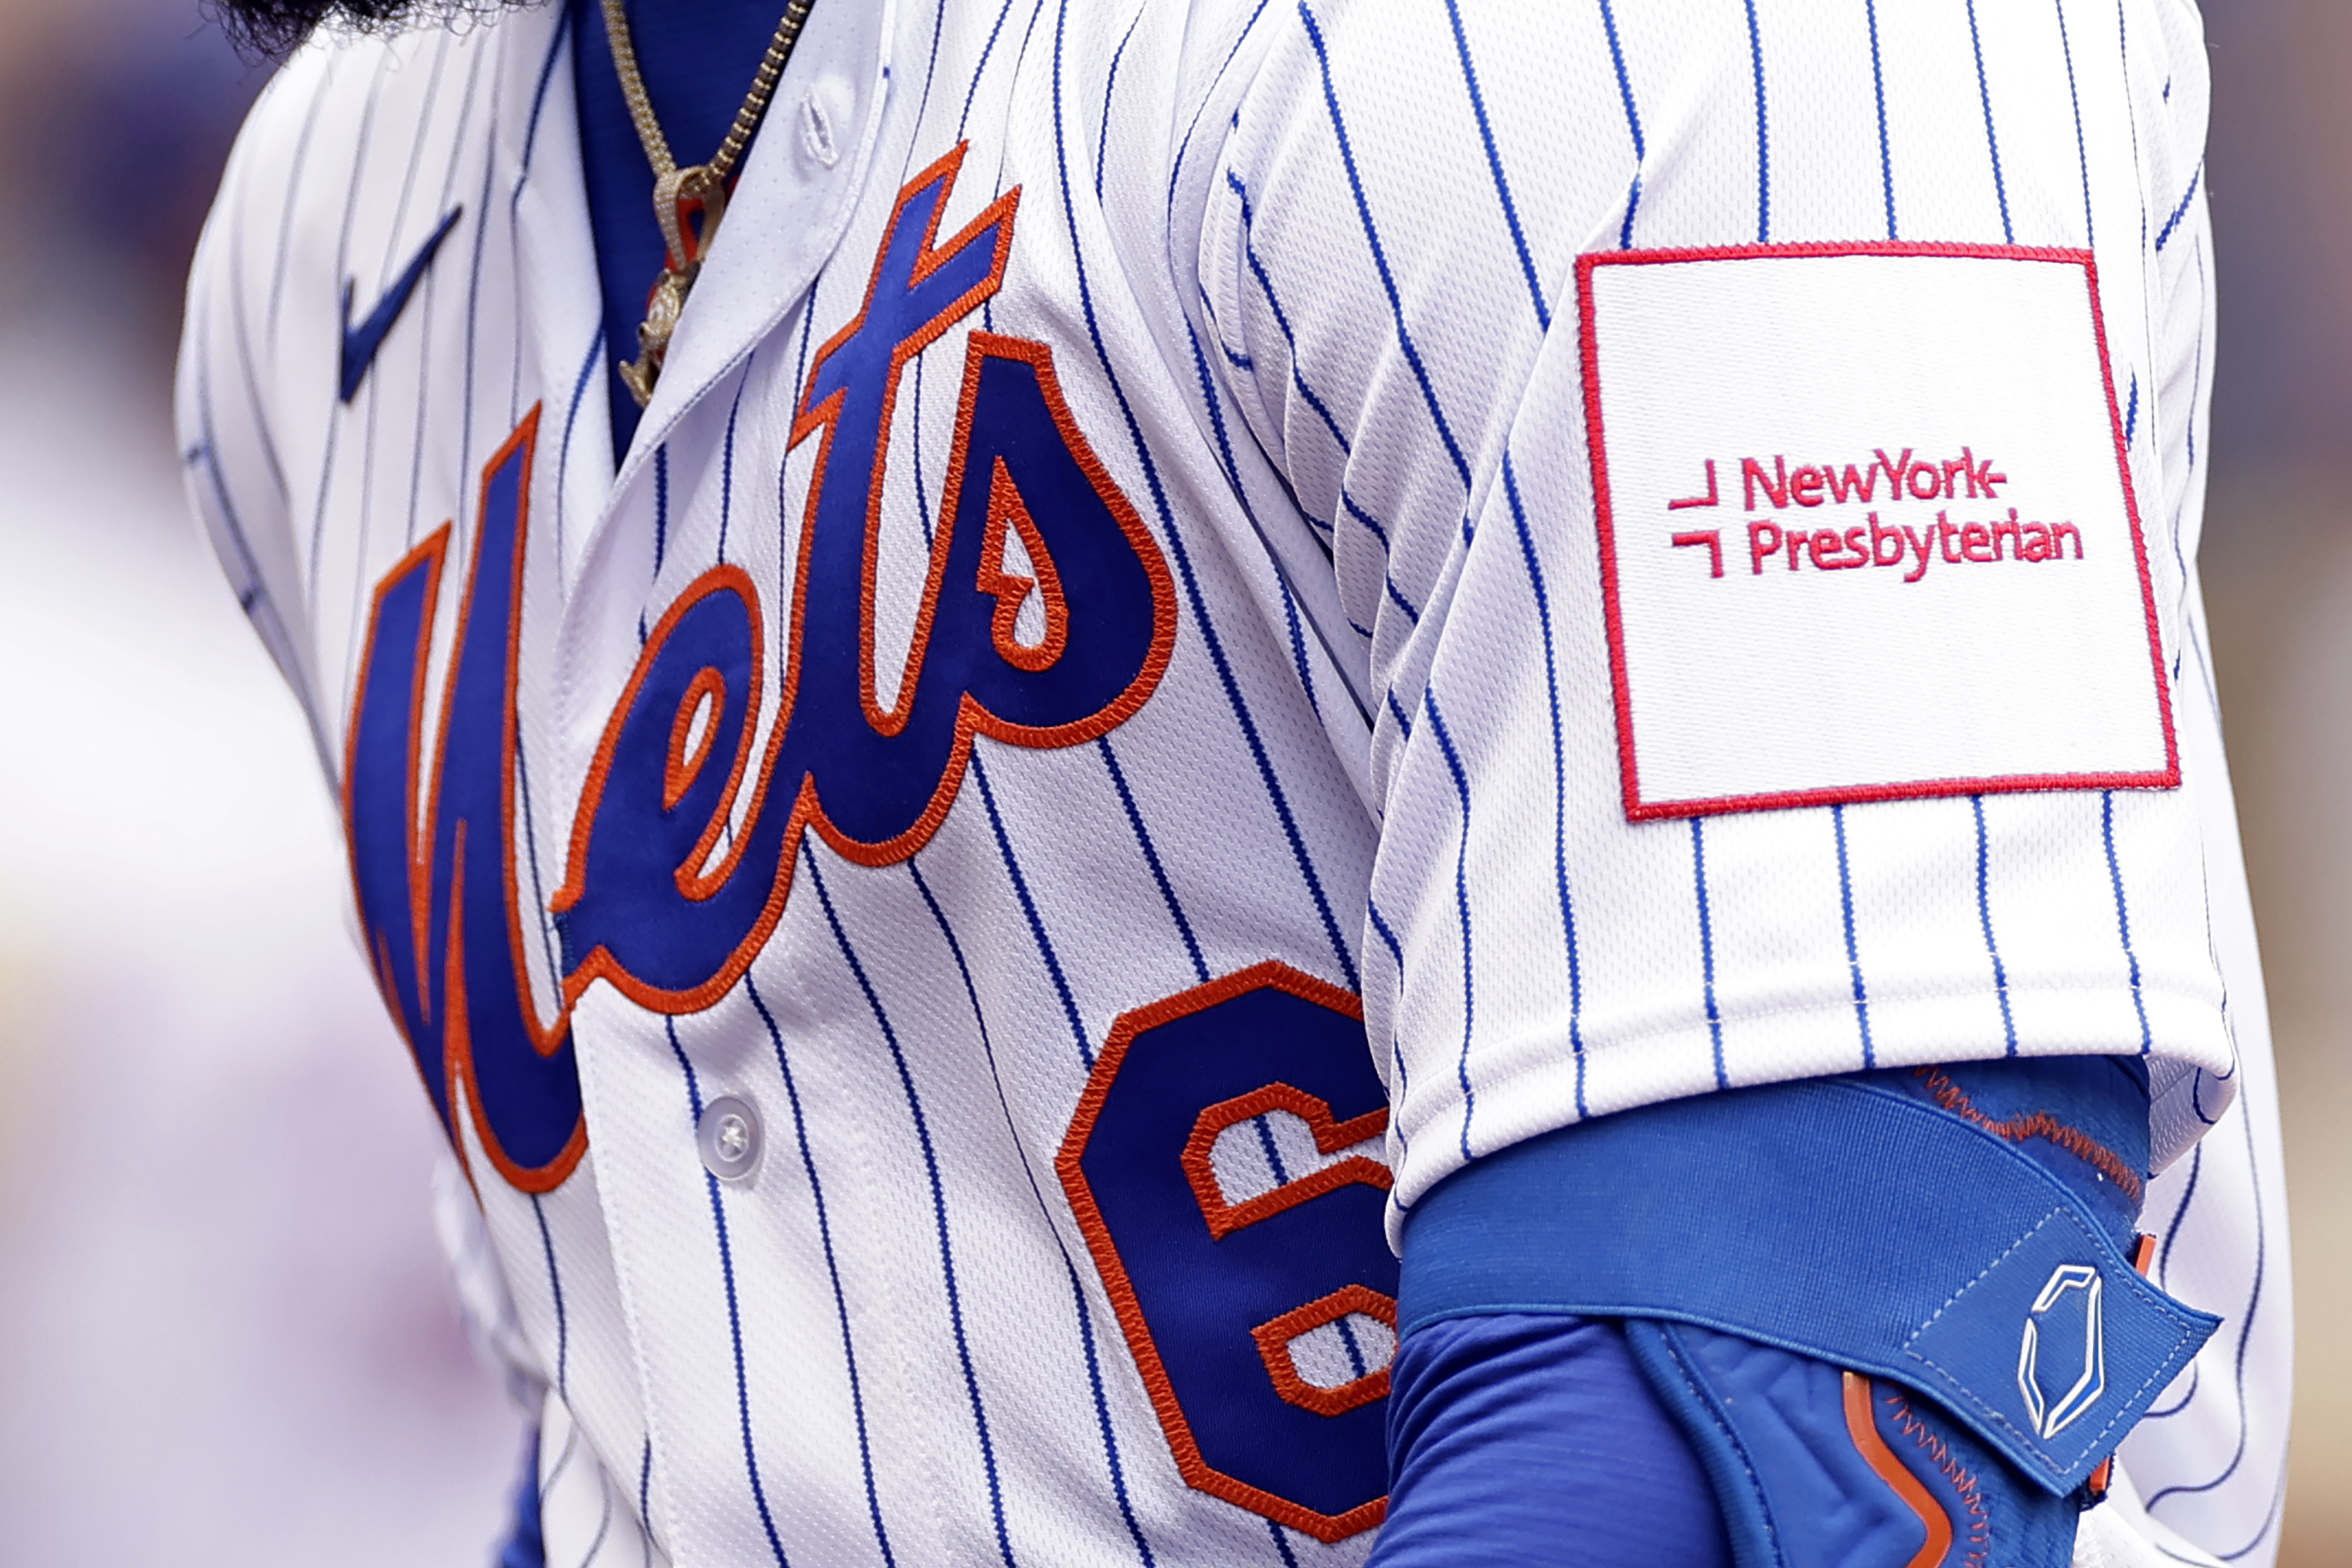 New York Mets Add Memorial Patch for Rusty – SportsLogos.Net News